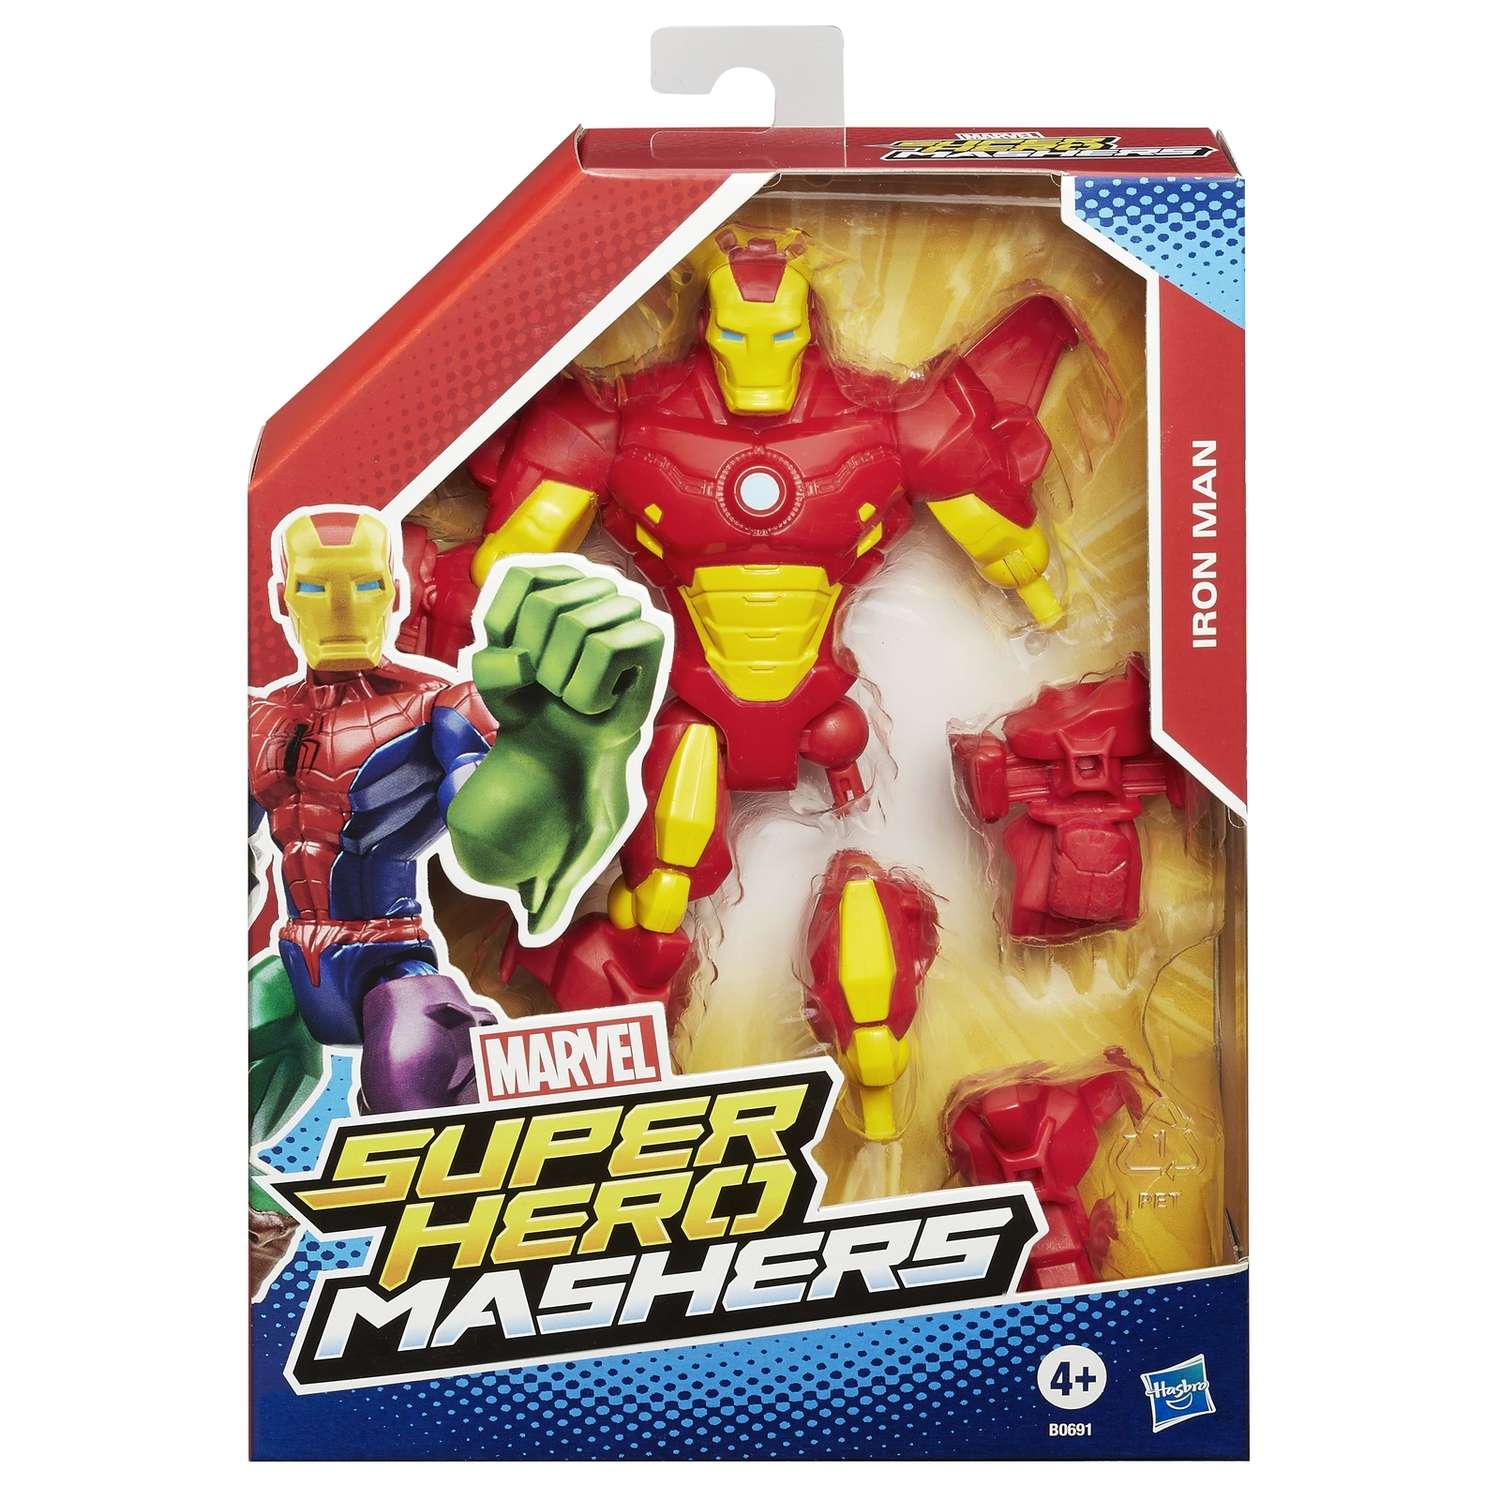 Разборные фигурки HEROMASHERS Super Hero Mashers в ассортименте - фото 81